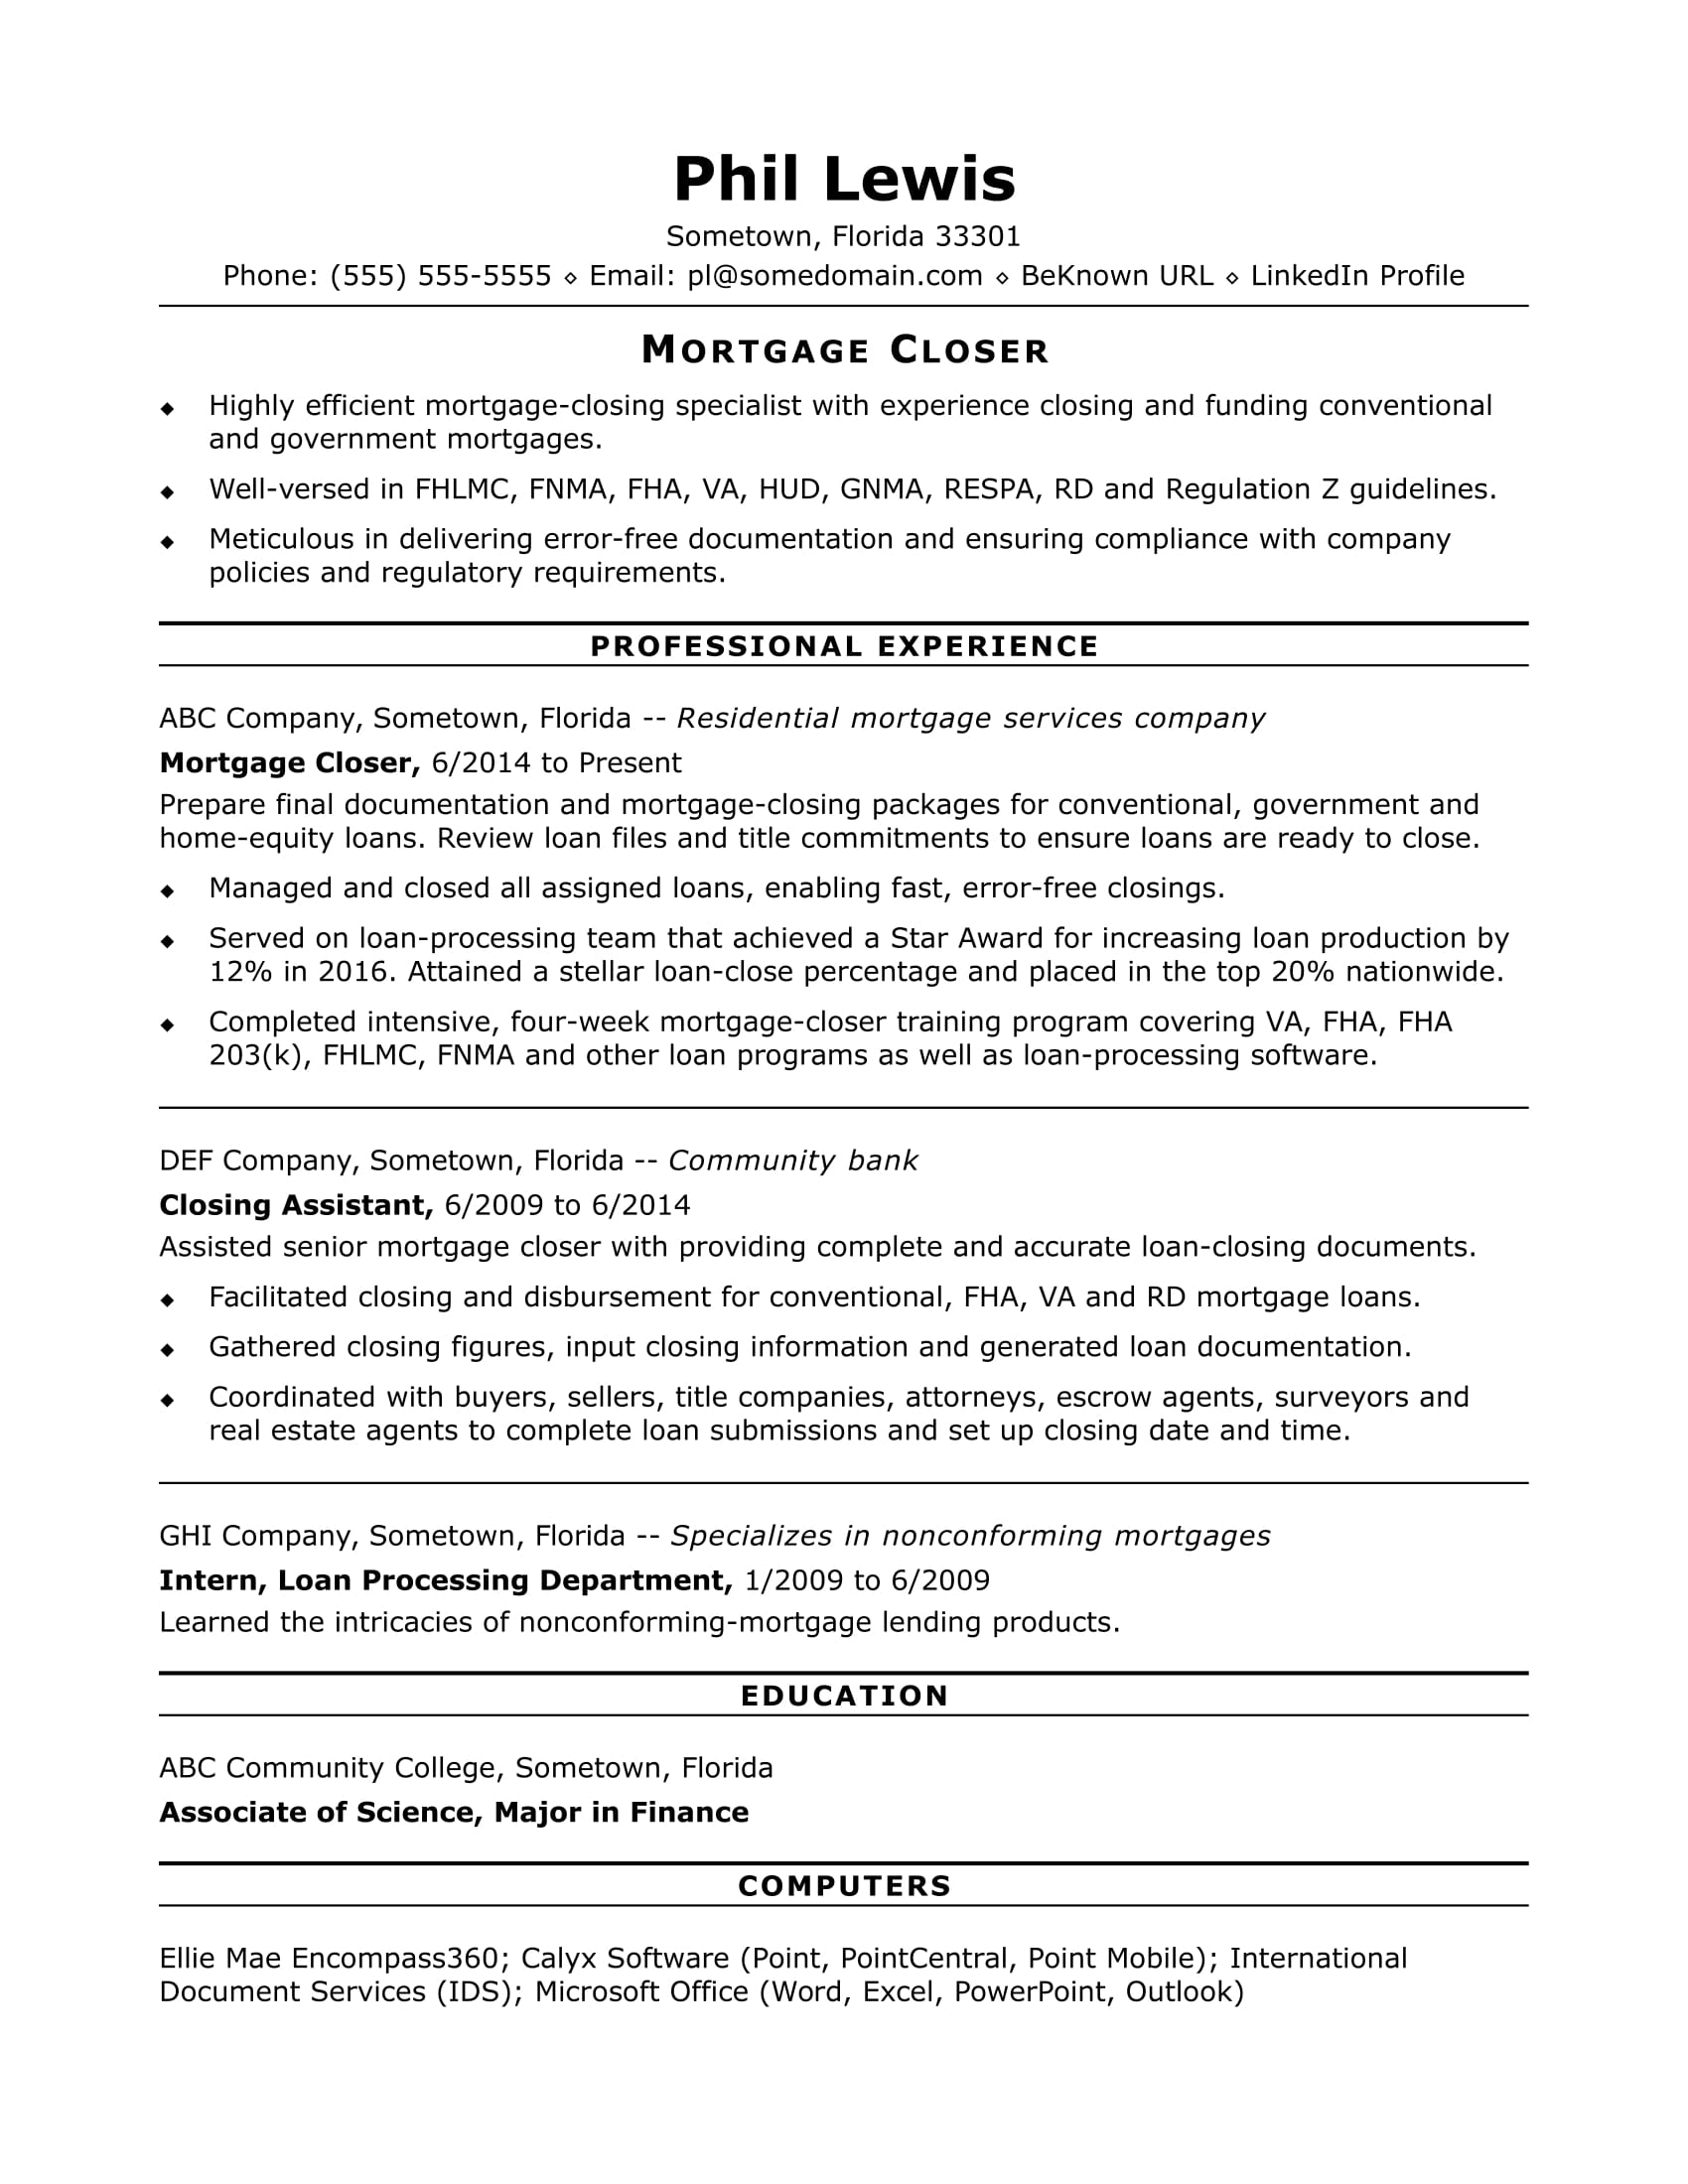 mortgage closer resume sample